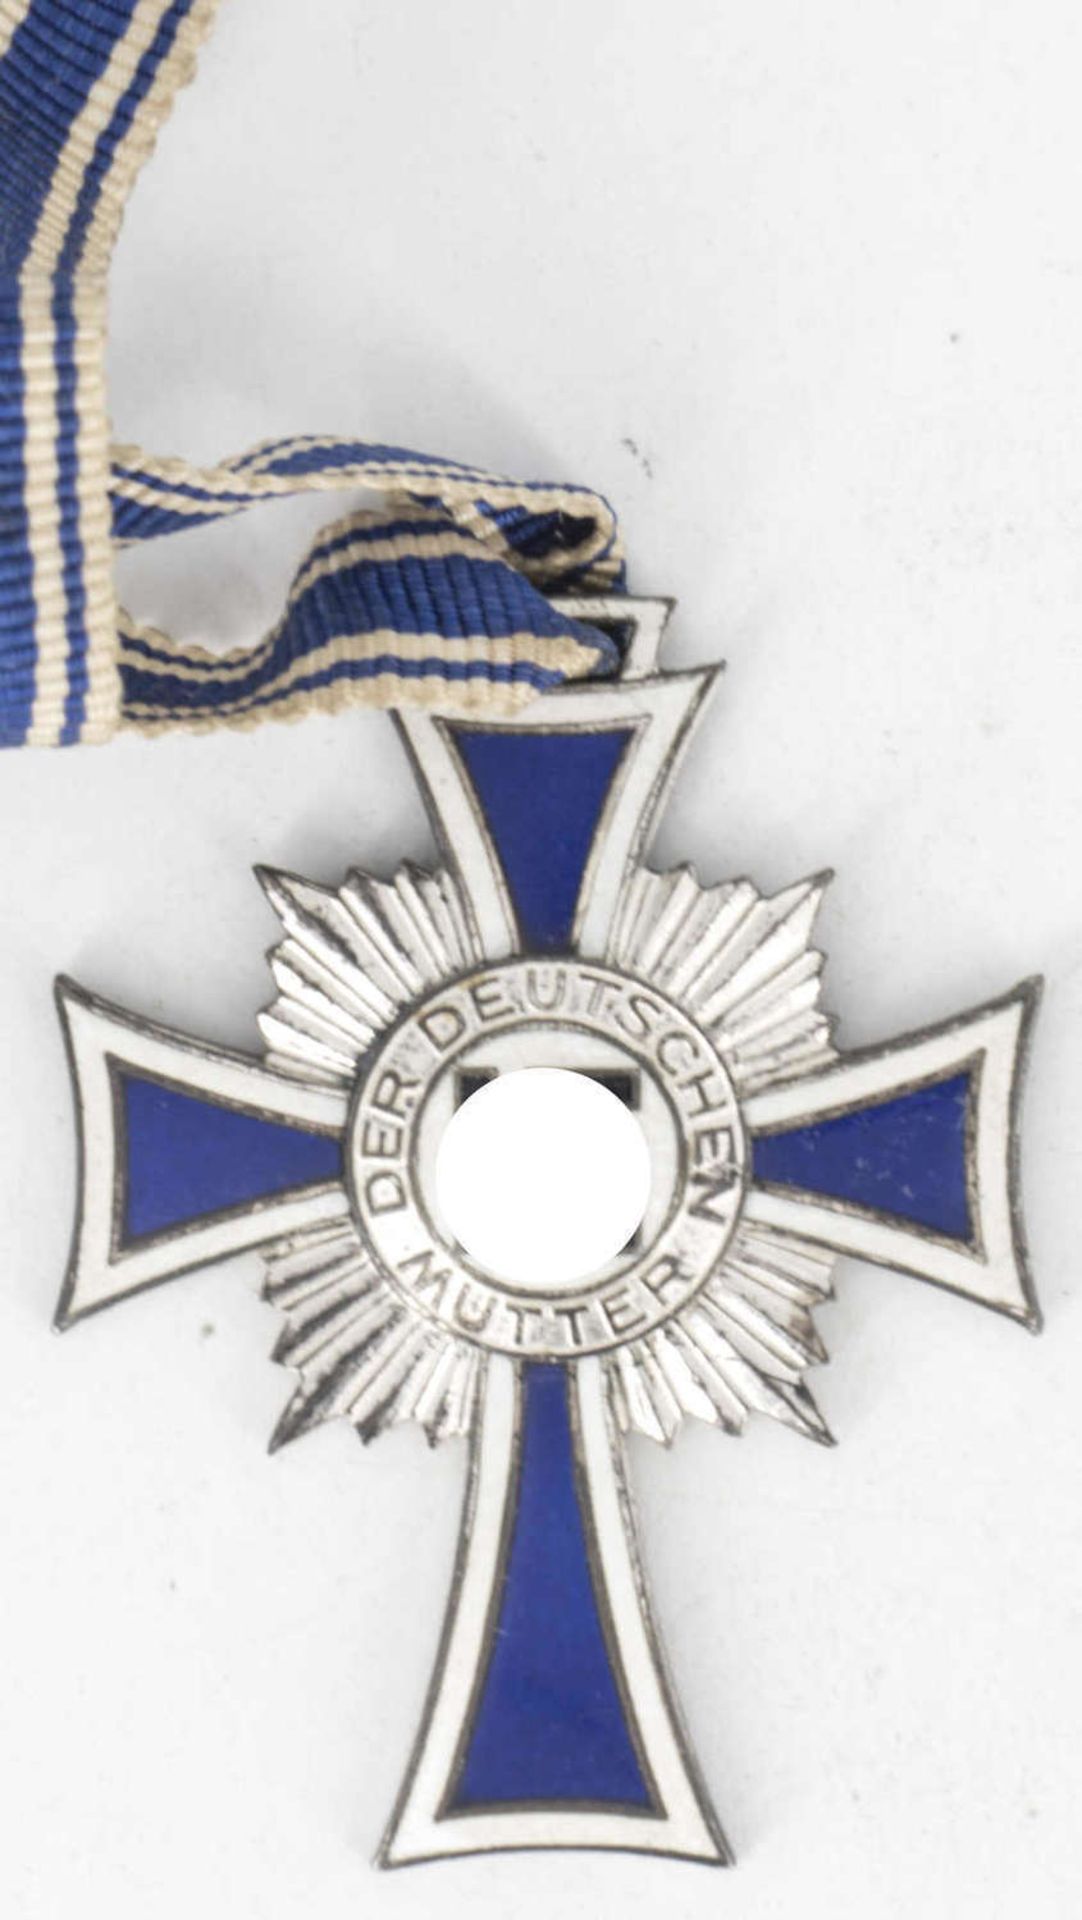 Deutsches Mutterkreuz in Silber am Band, rückseitig: 16. Dezember 1938. Email. Guter Zustand.